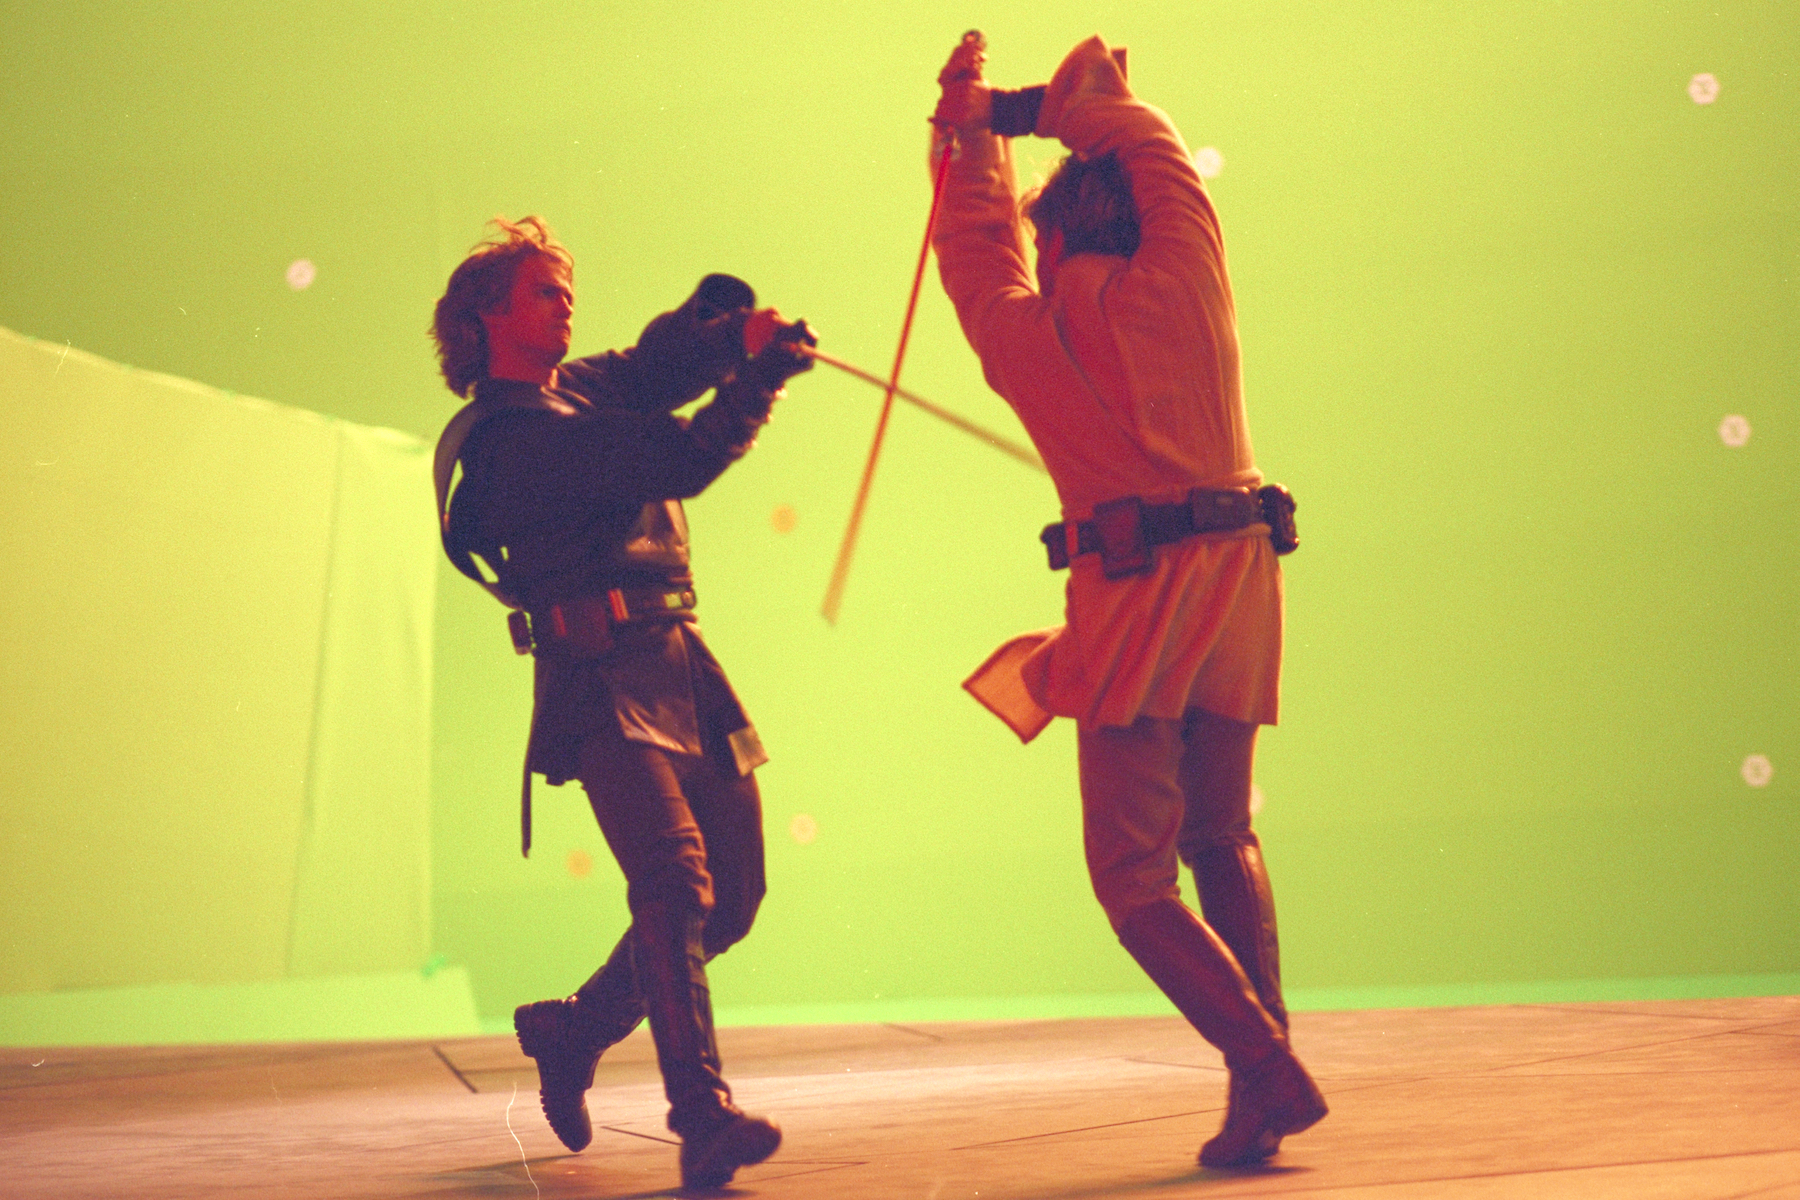 Hayden Christensen and Ewan McGregor do battle, against what will be an entirely digital backdrop in 